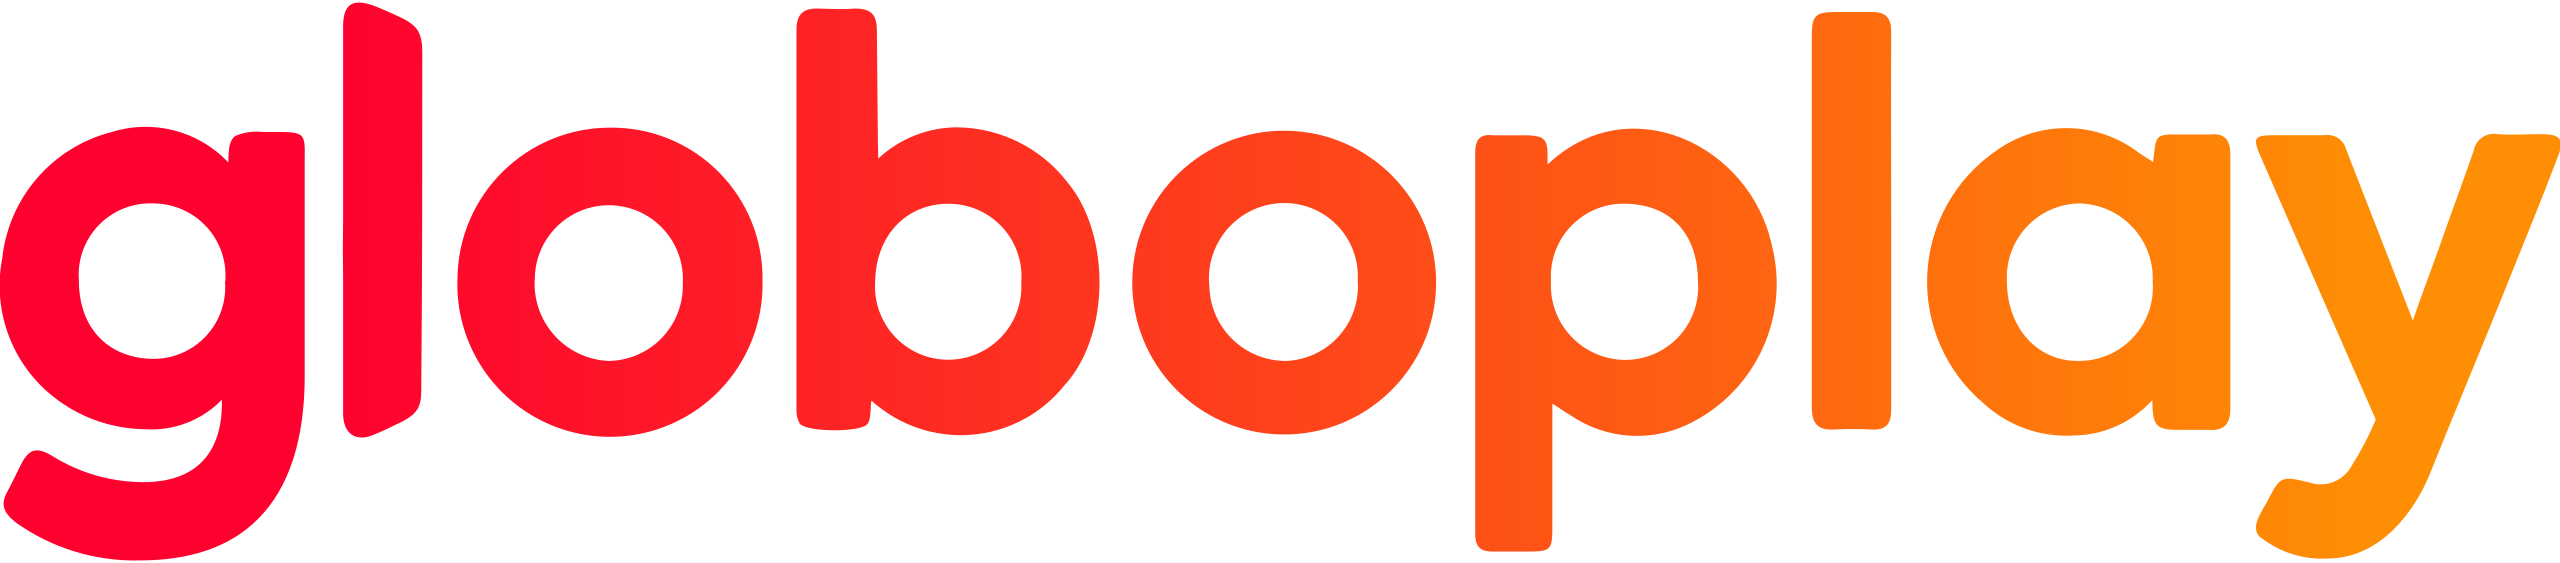 Globoplay_logo_2020